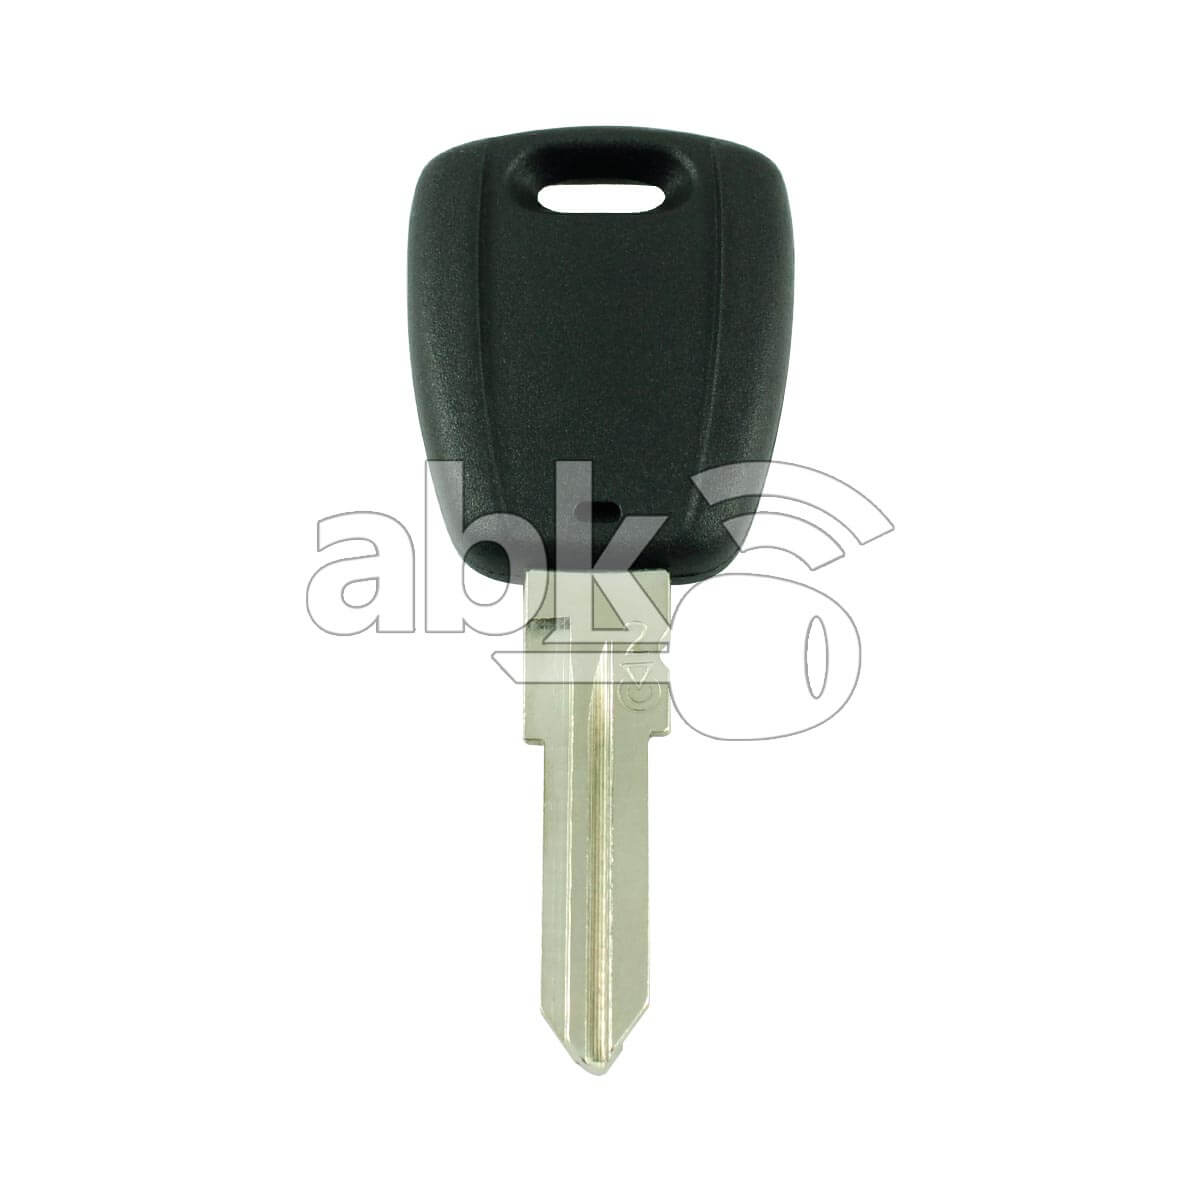 Fiat Chip Less Key GT15 - ABK-4130 - ABKEYS.COM